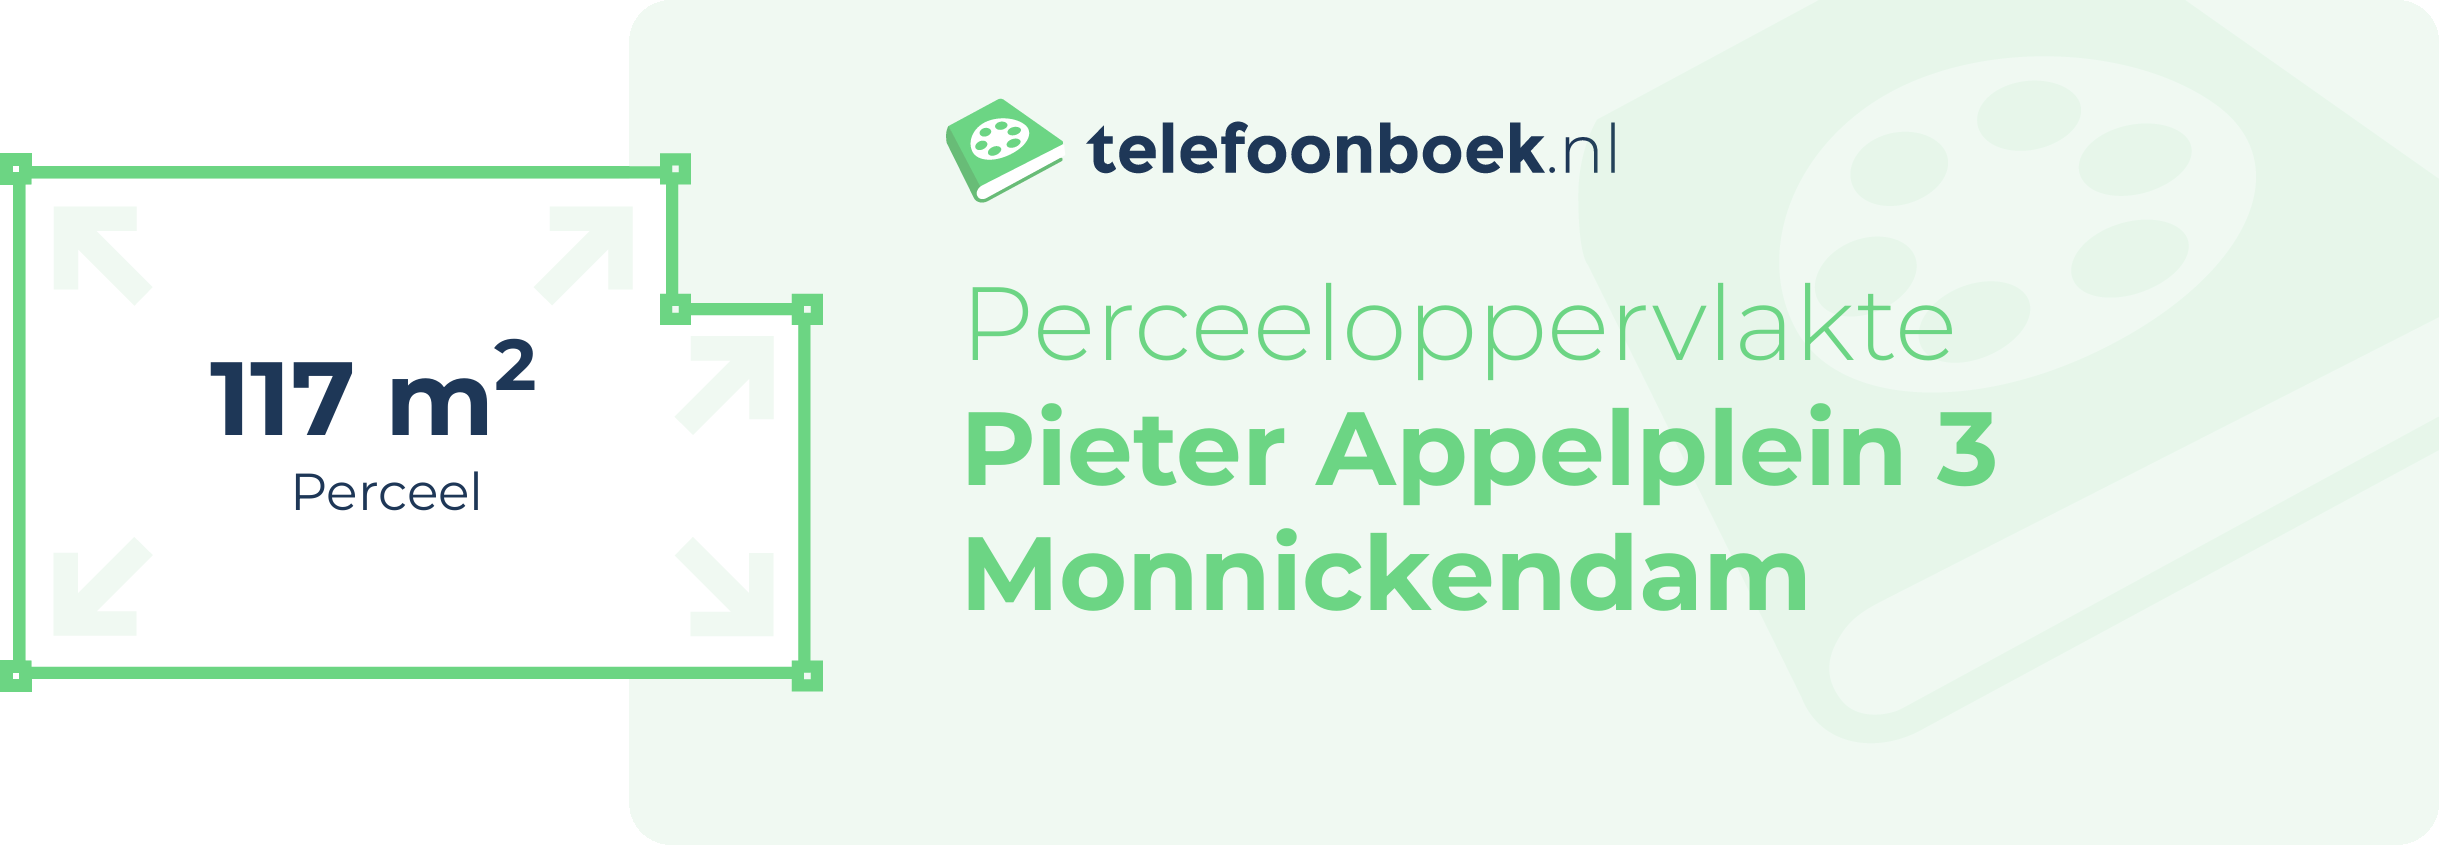 Perceeloppervlakte Pieter Appelplein 3 Monnickendam